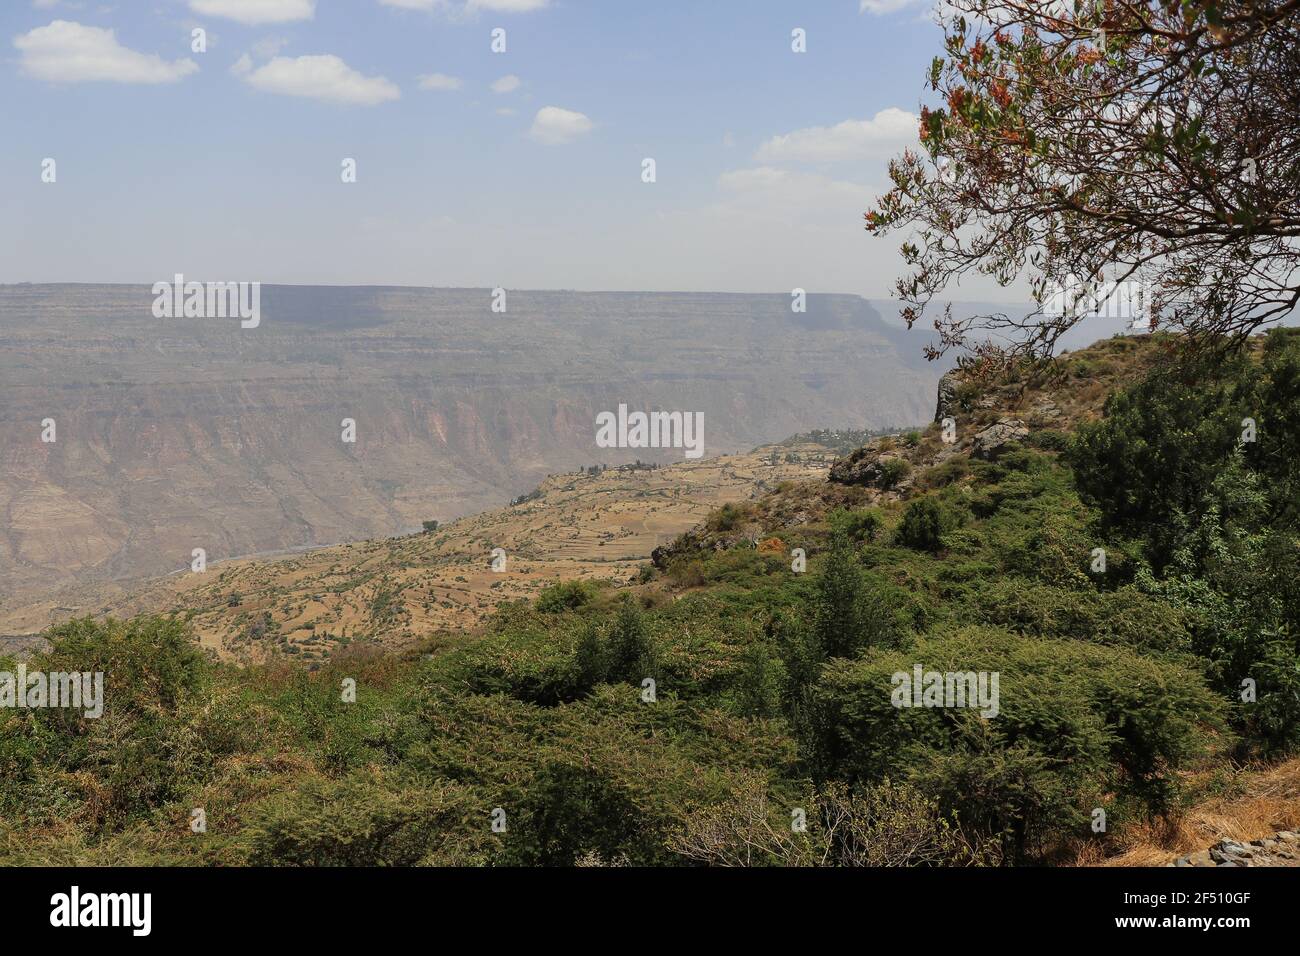 The great Rift Valley, Ethiopia Stock Photo